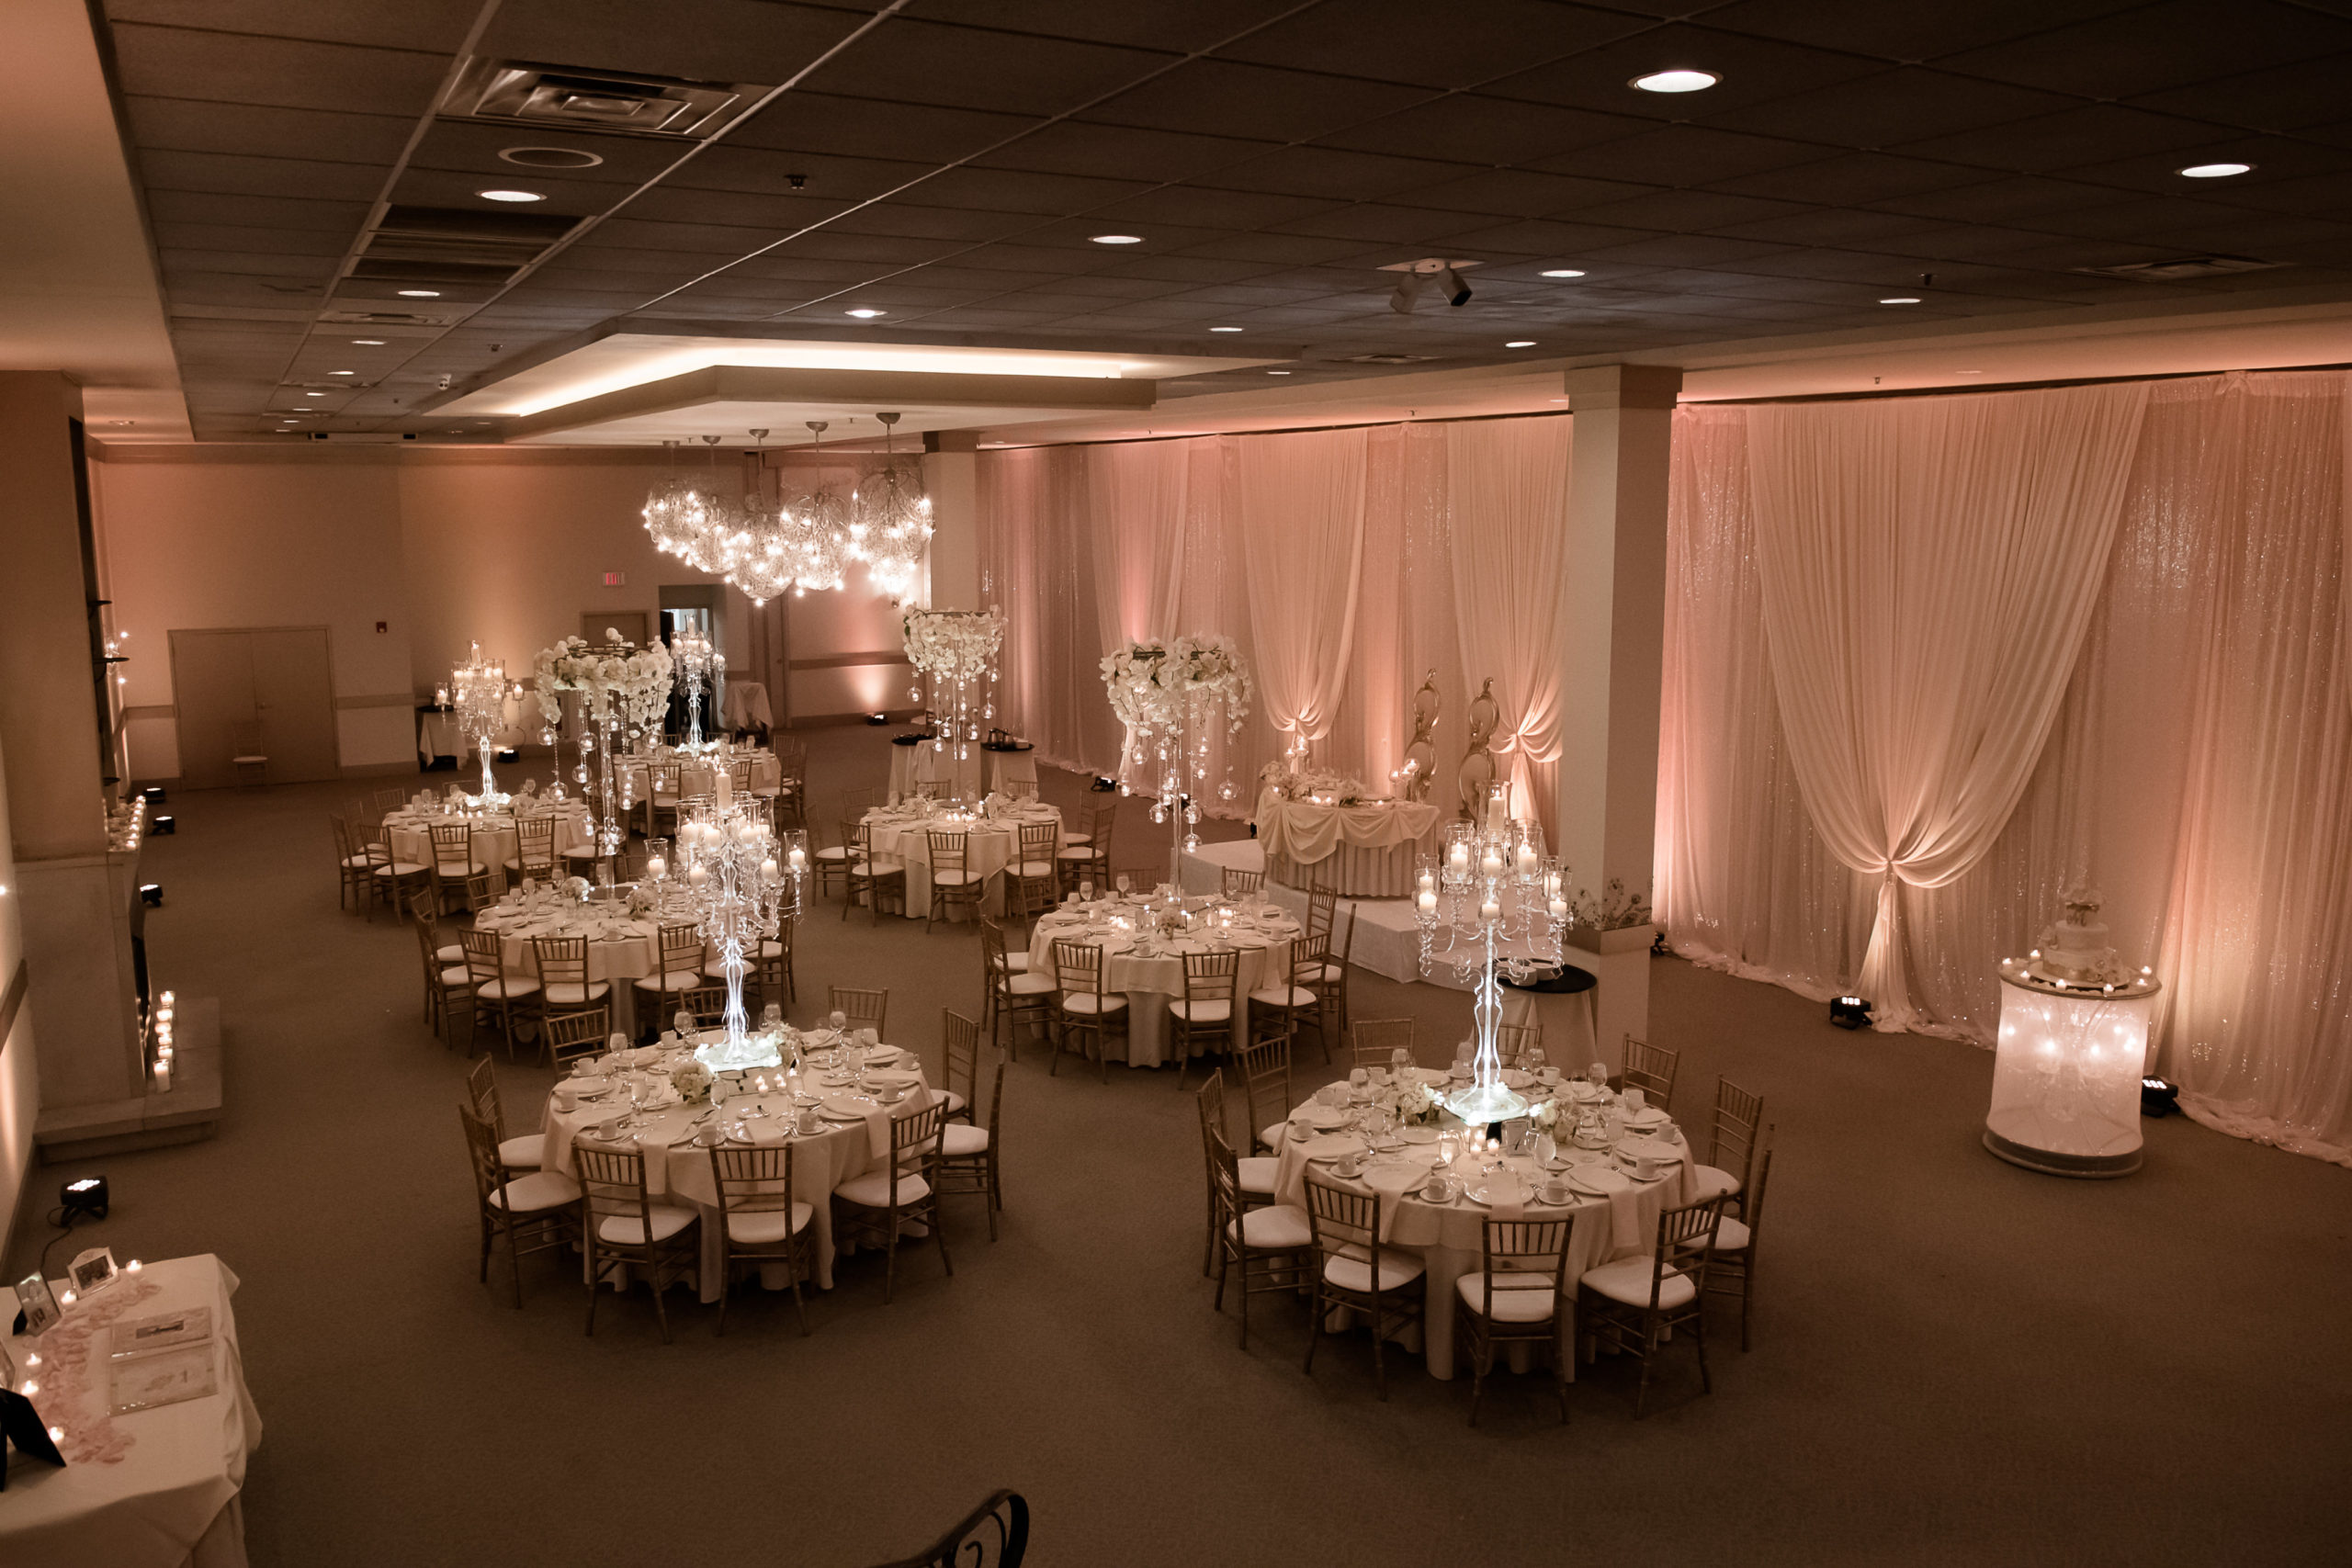 Banquet Hall Overview Shot